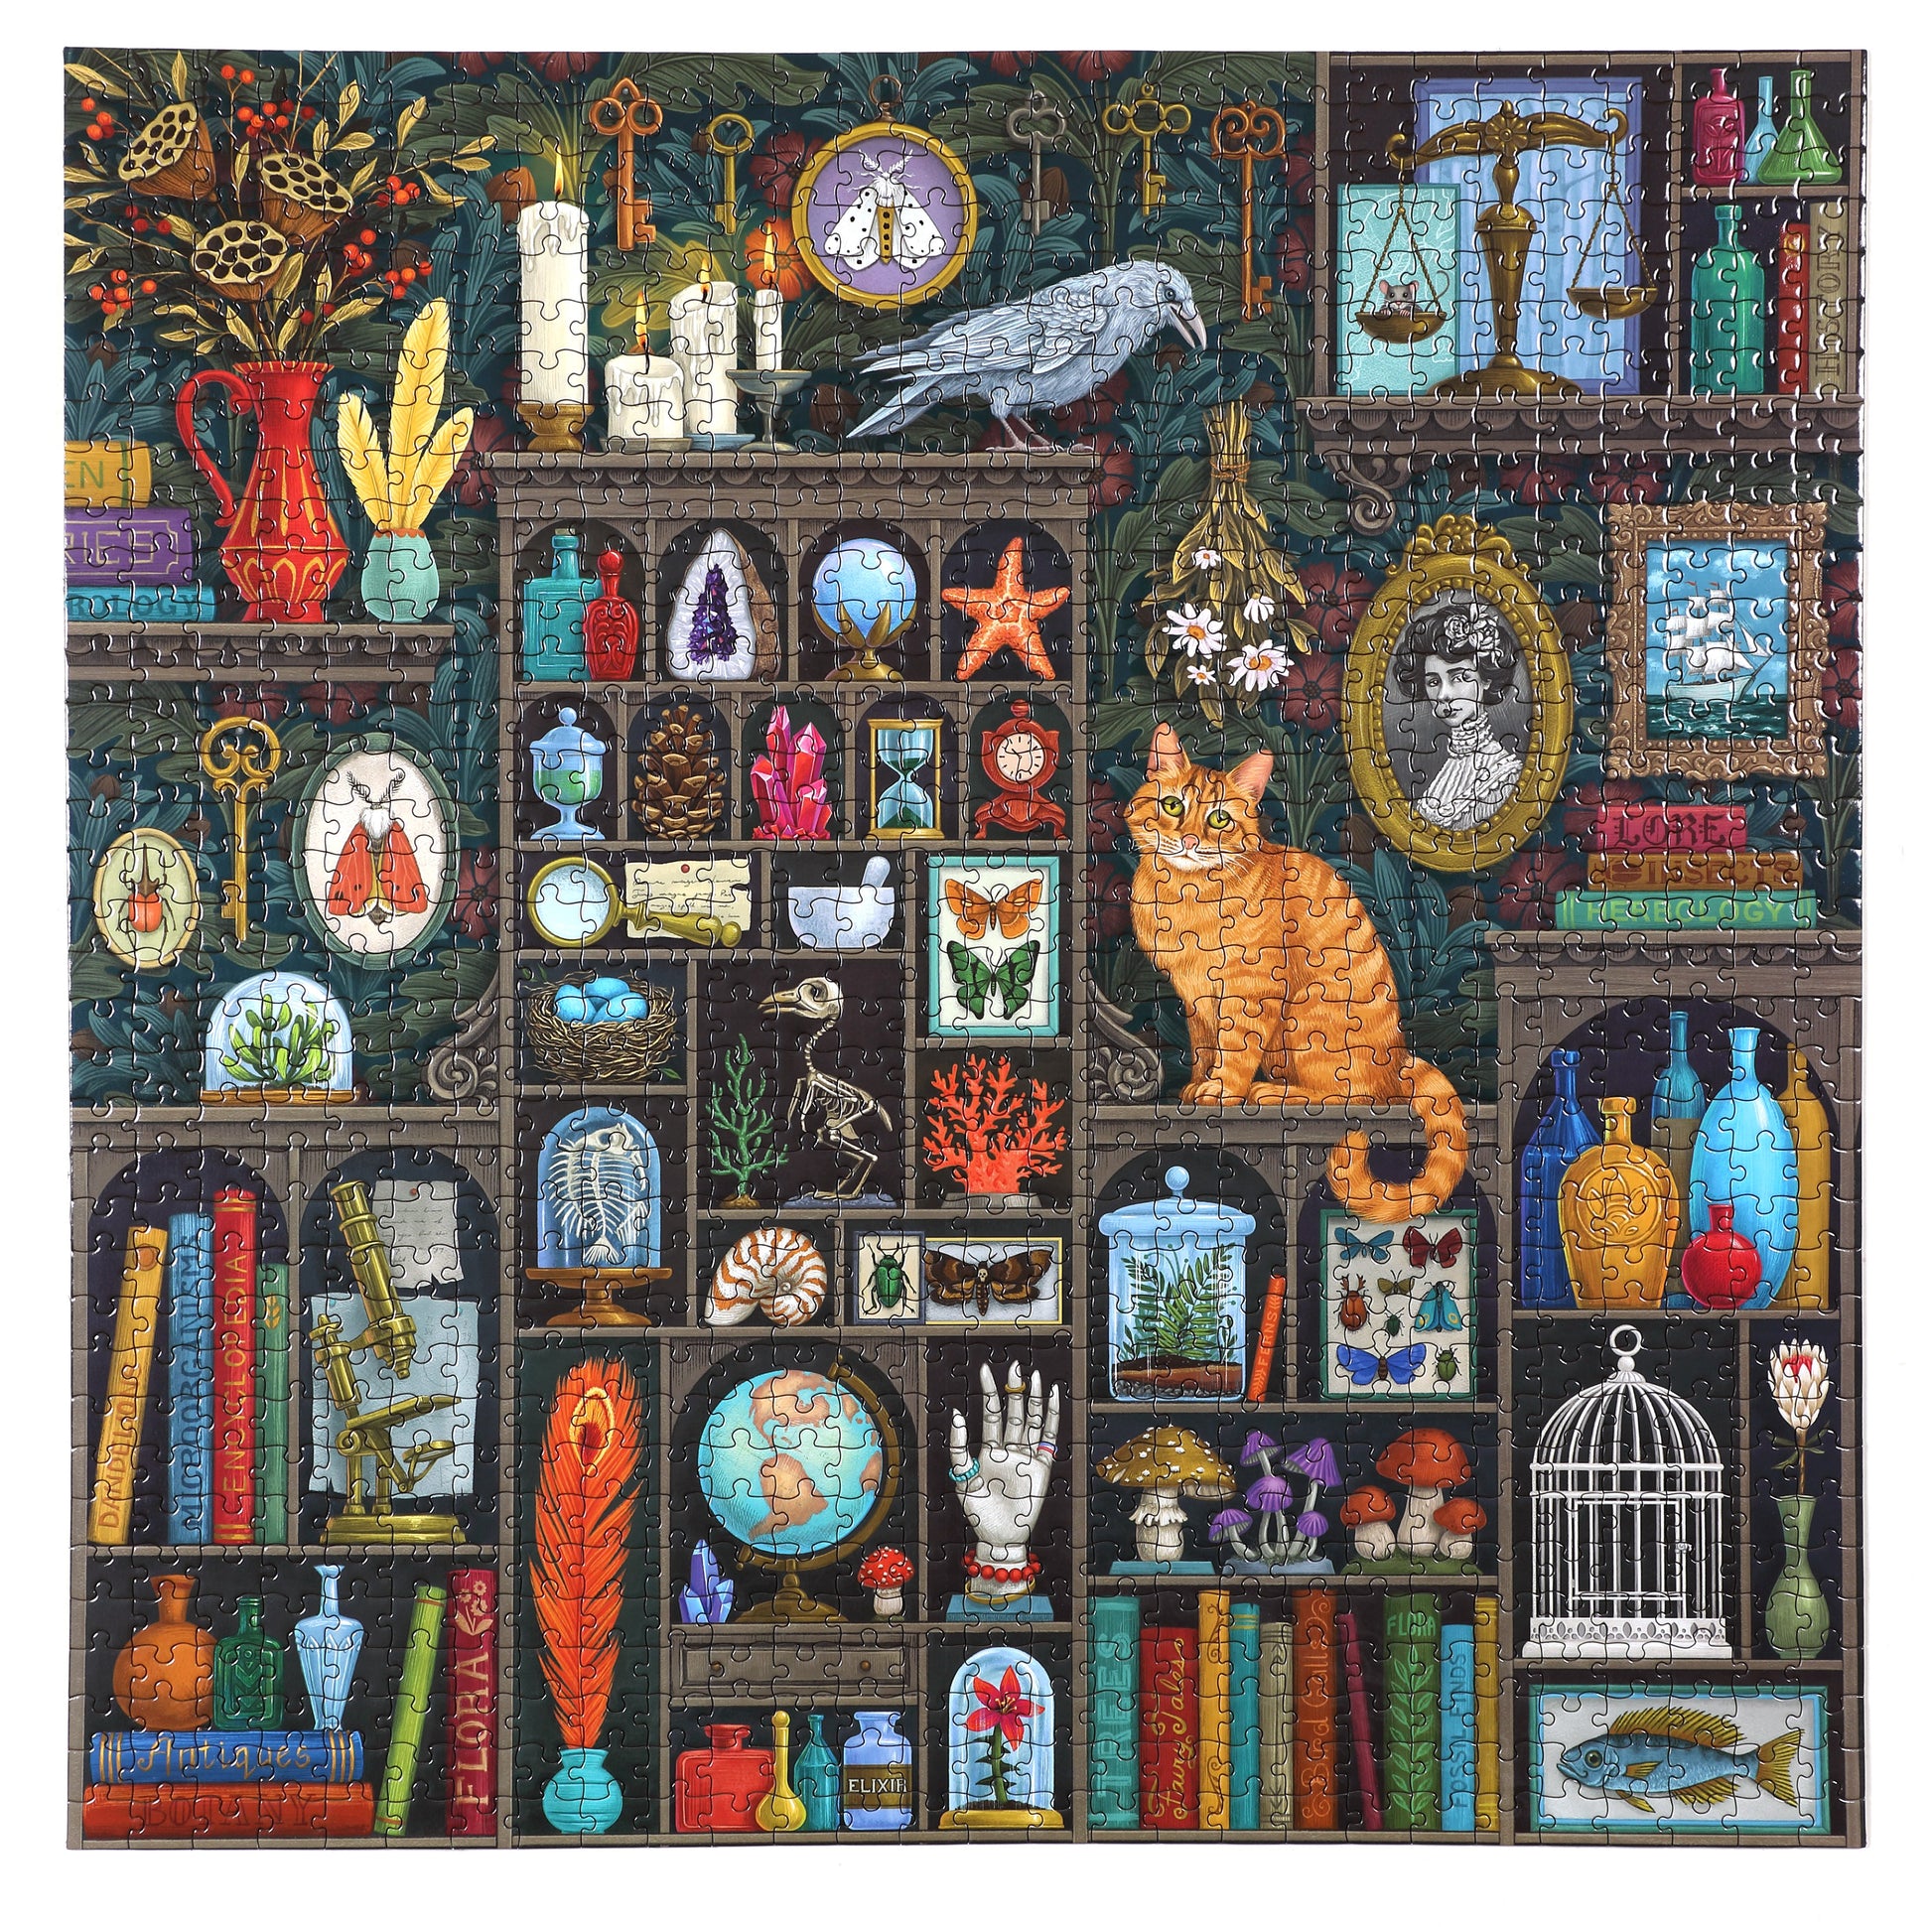 Alchemist's Cabinet 1000 Piece Jigsaw Puzzle | eeBoo Piece & Love | Makes a Great Gift